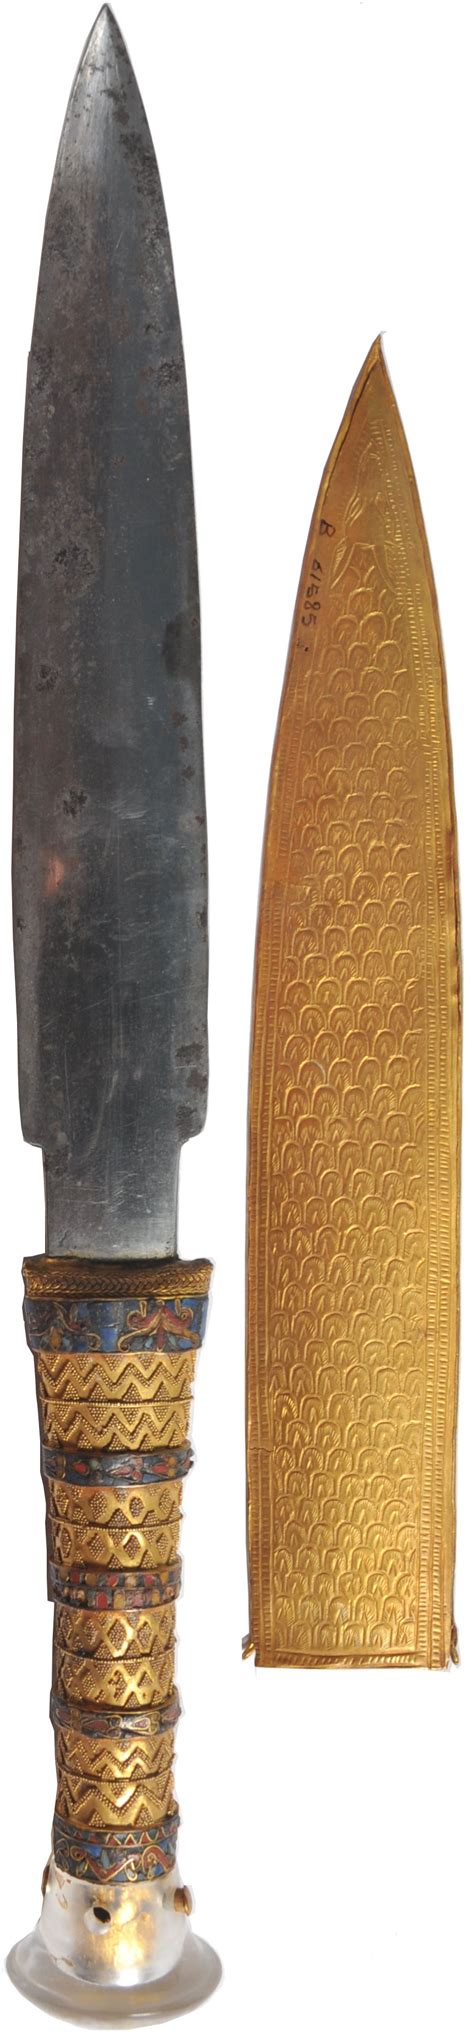 King Tuts Dagger Was Made Of Meteorite Iron